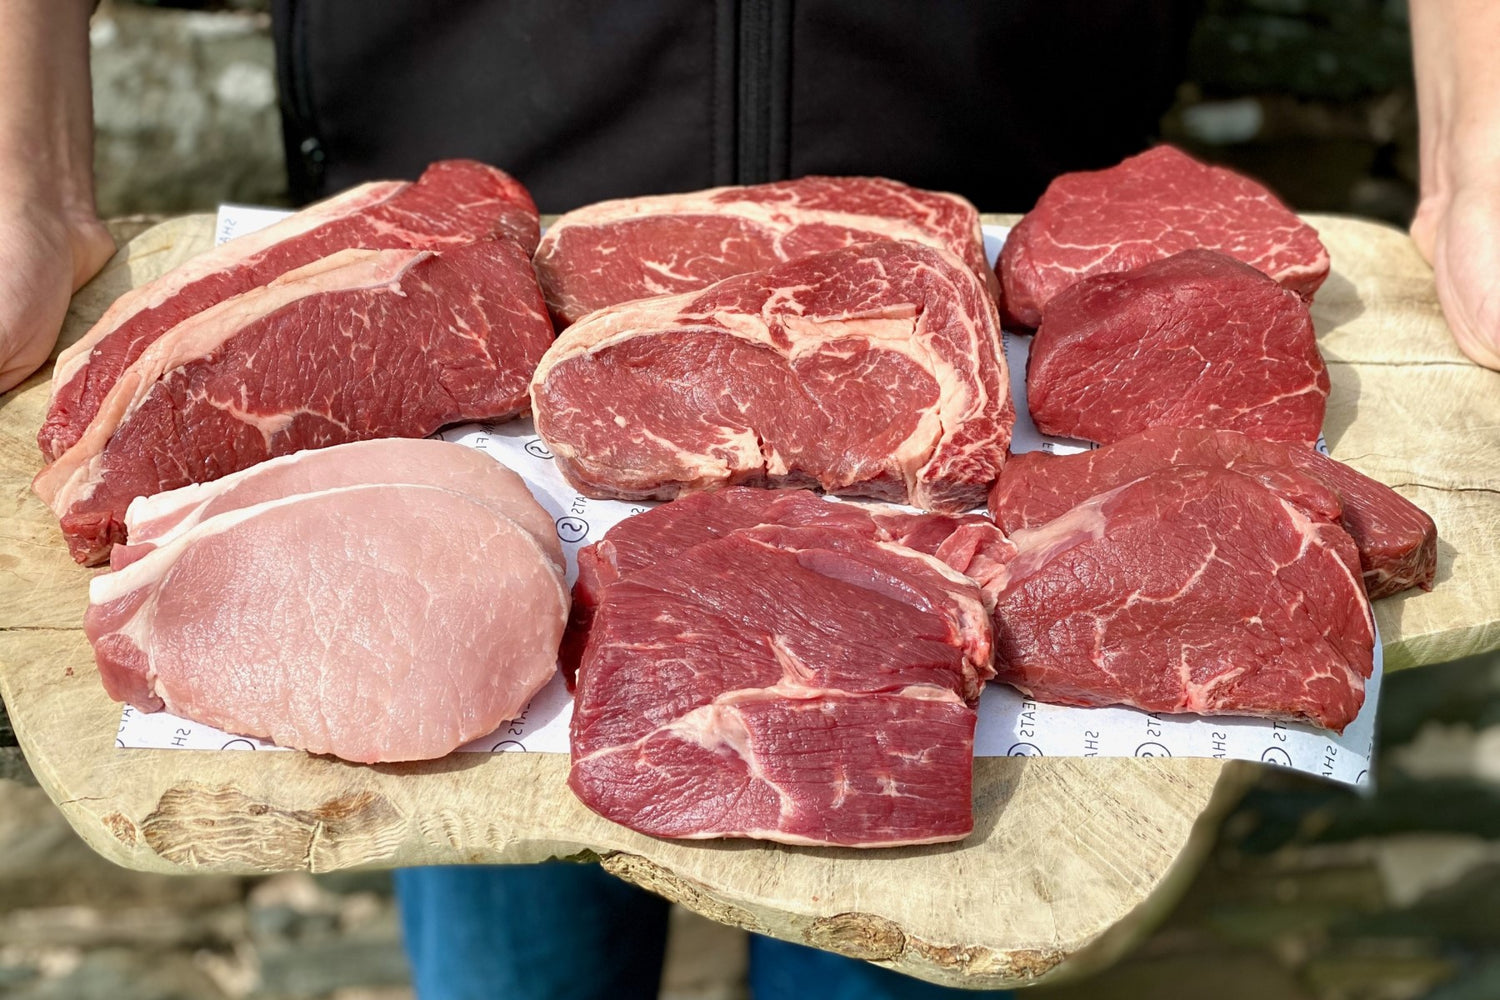 wholesale frozen meat supplier singapore, frozen beef pork delivery online